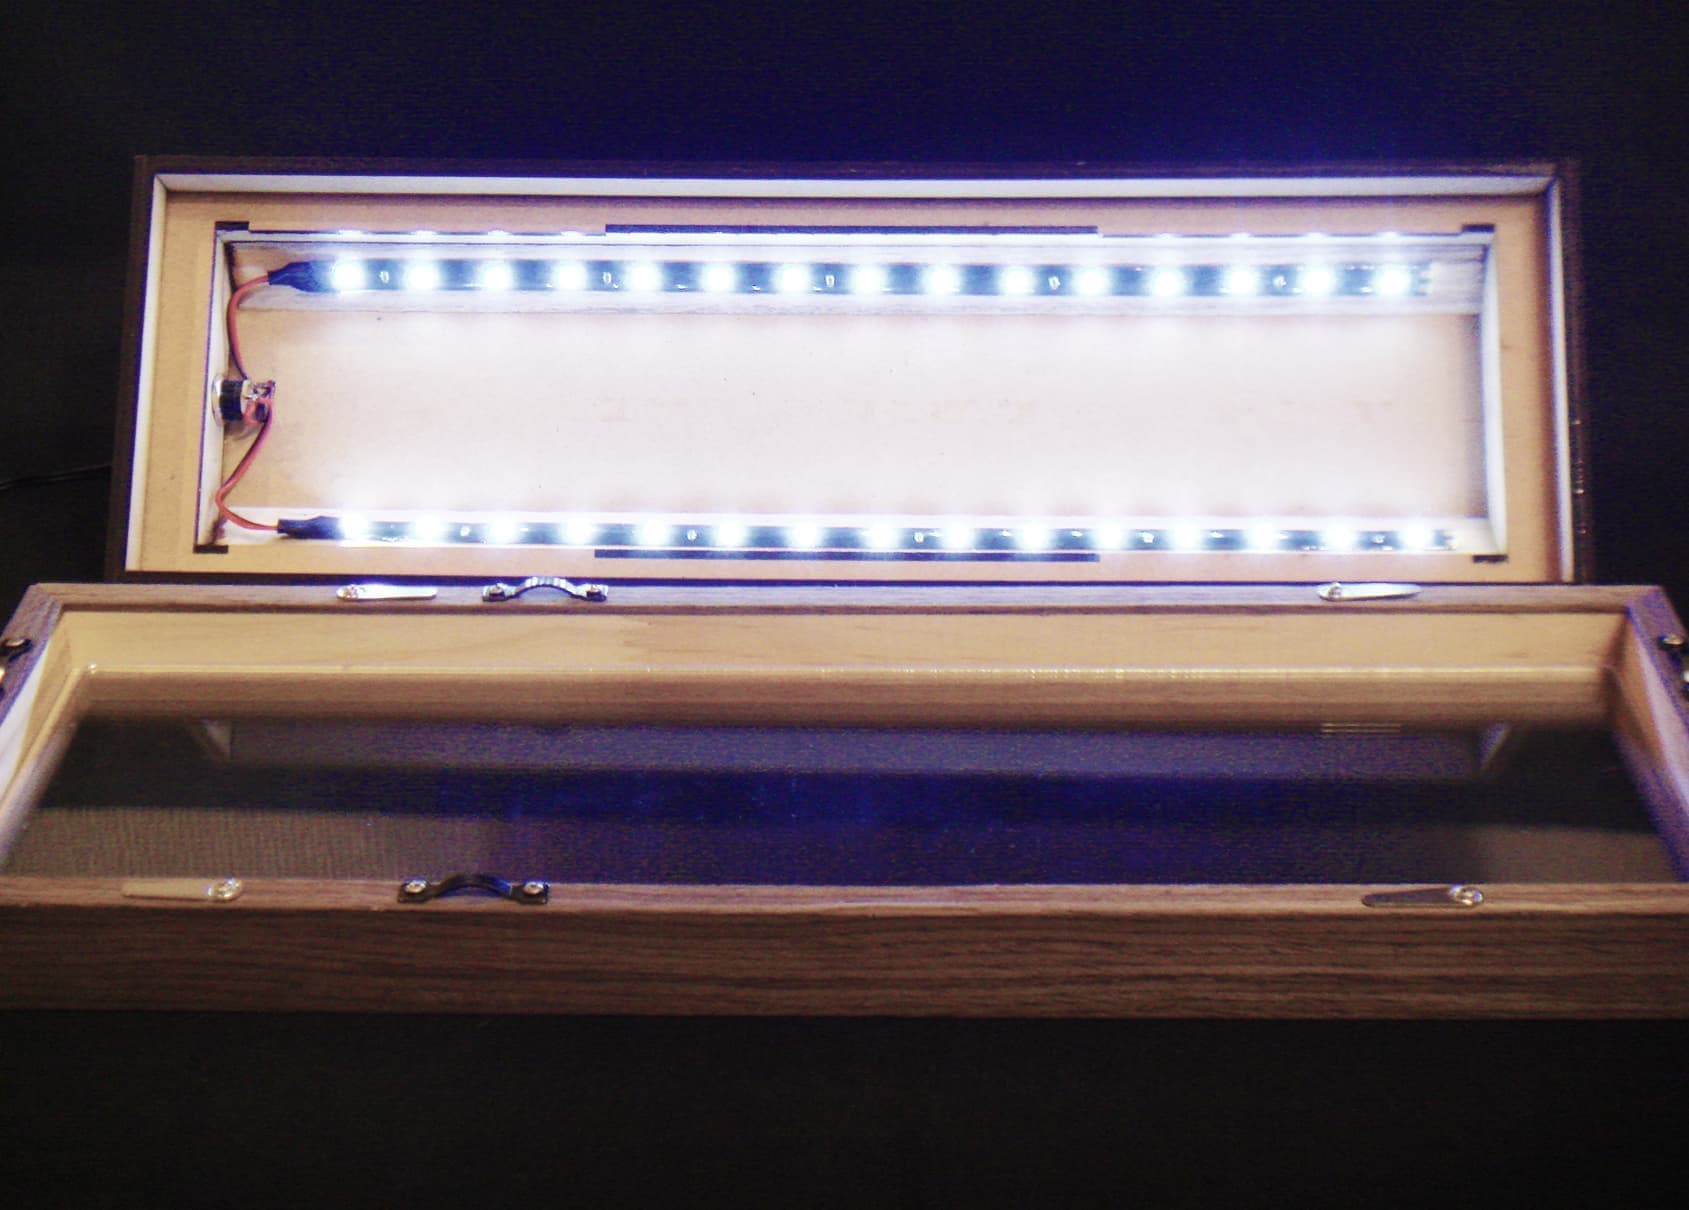 LED LIGHT BOX dedicated to cartridge frame for display